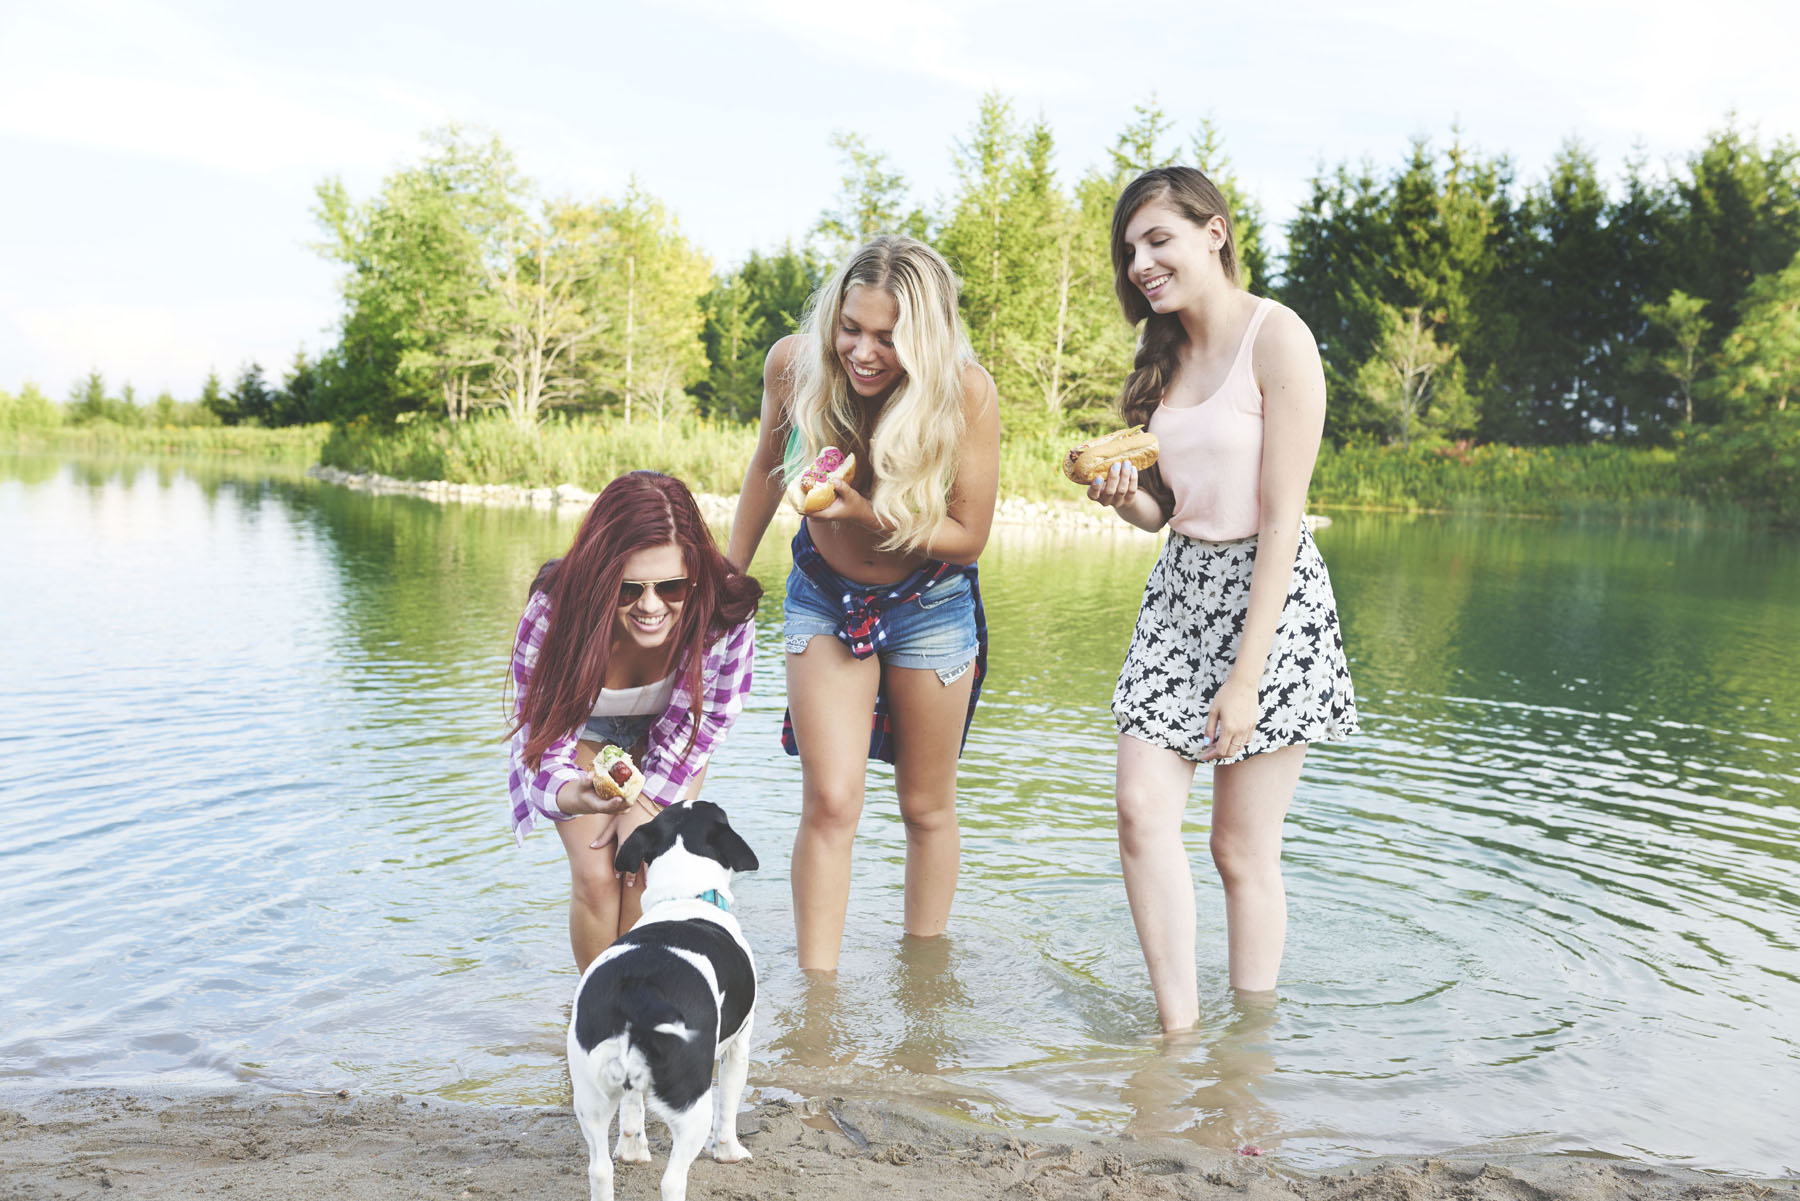 Beach party_girls in the lake.jpg